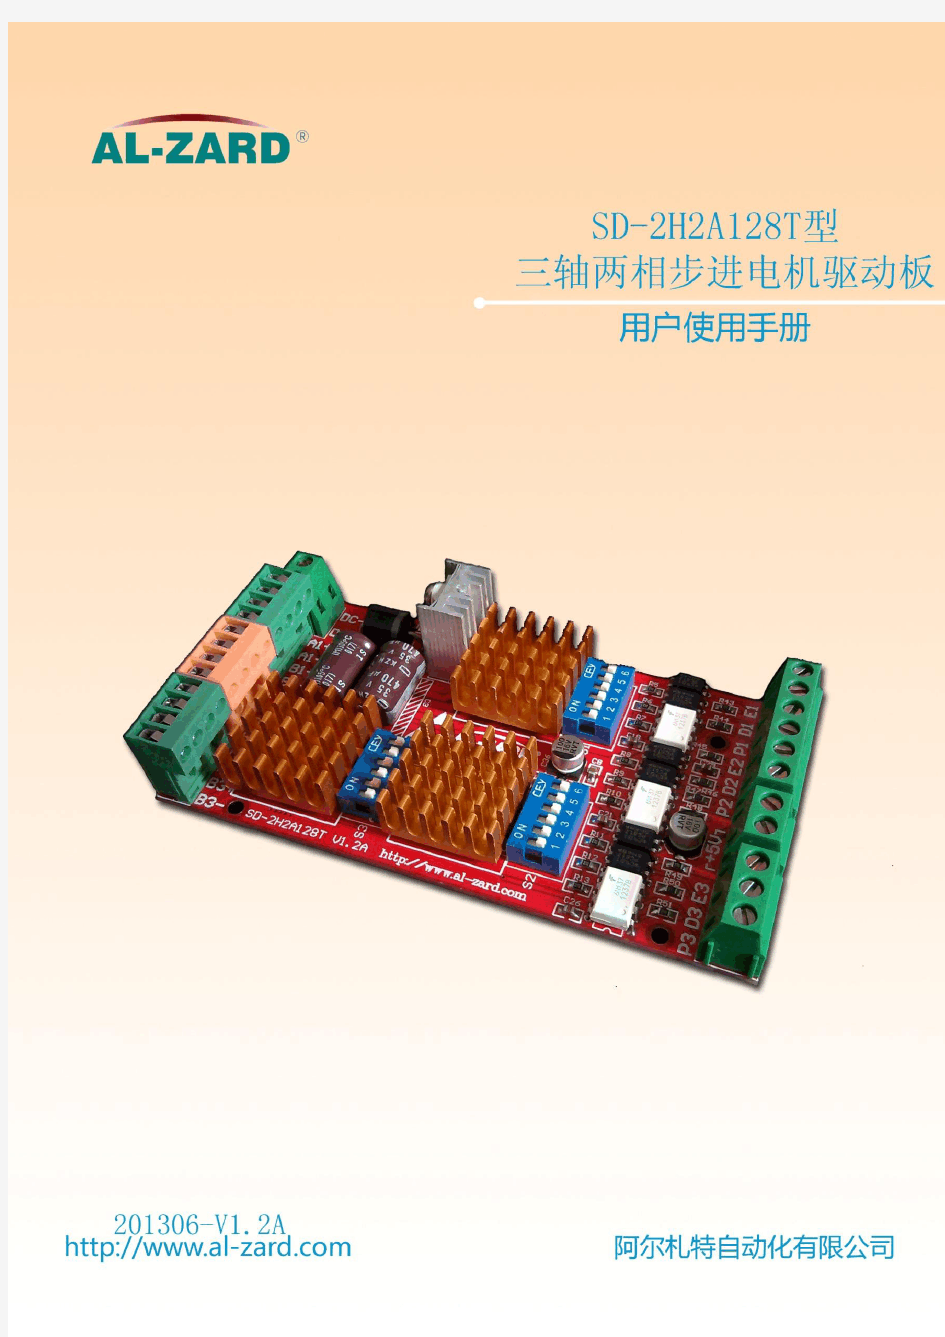 SD-2H2A128T型三轴两相步进电机驱动板使用手册